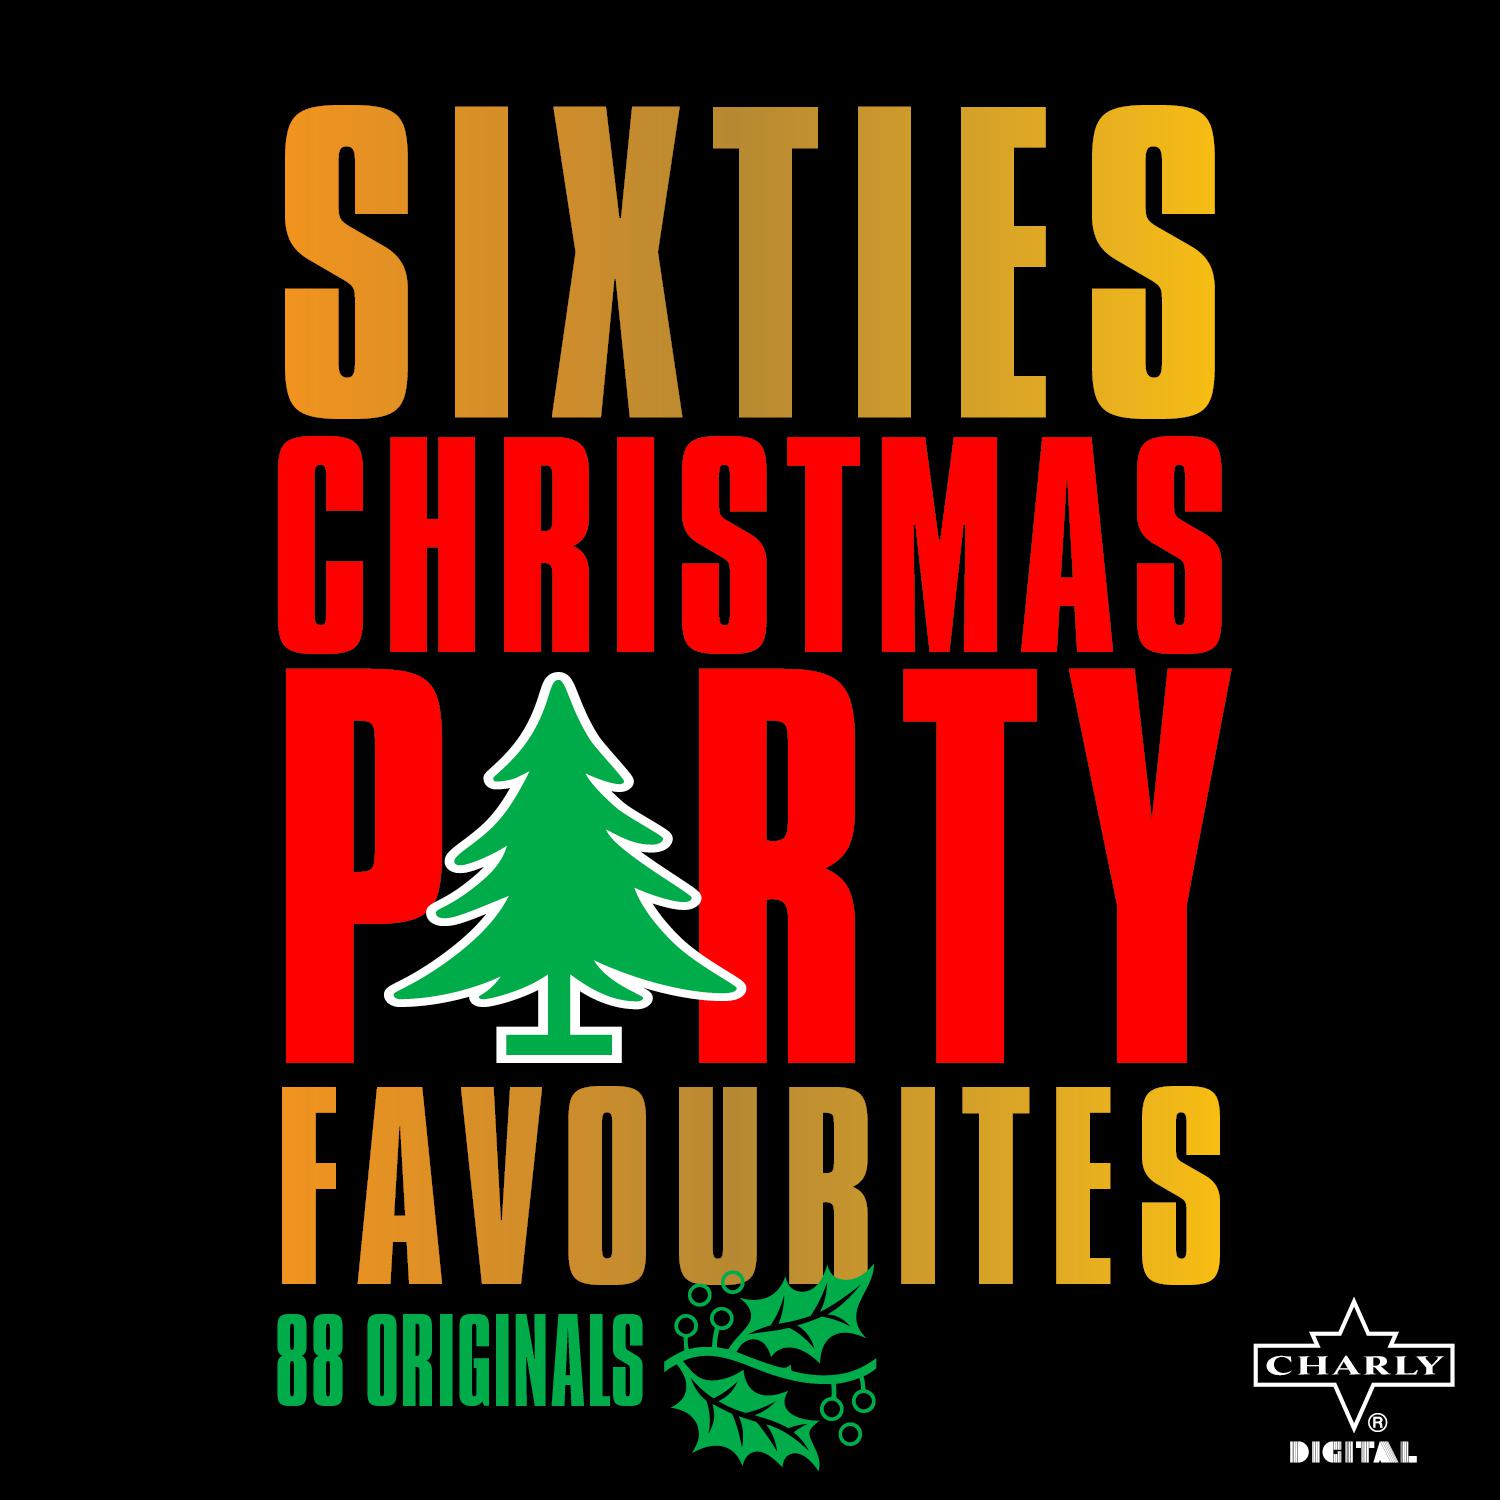 Sixties Christmas Party Favourites - 88 Originals